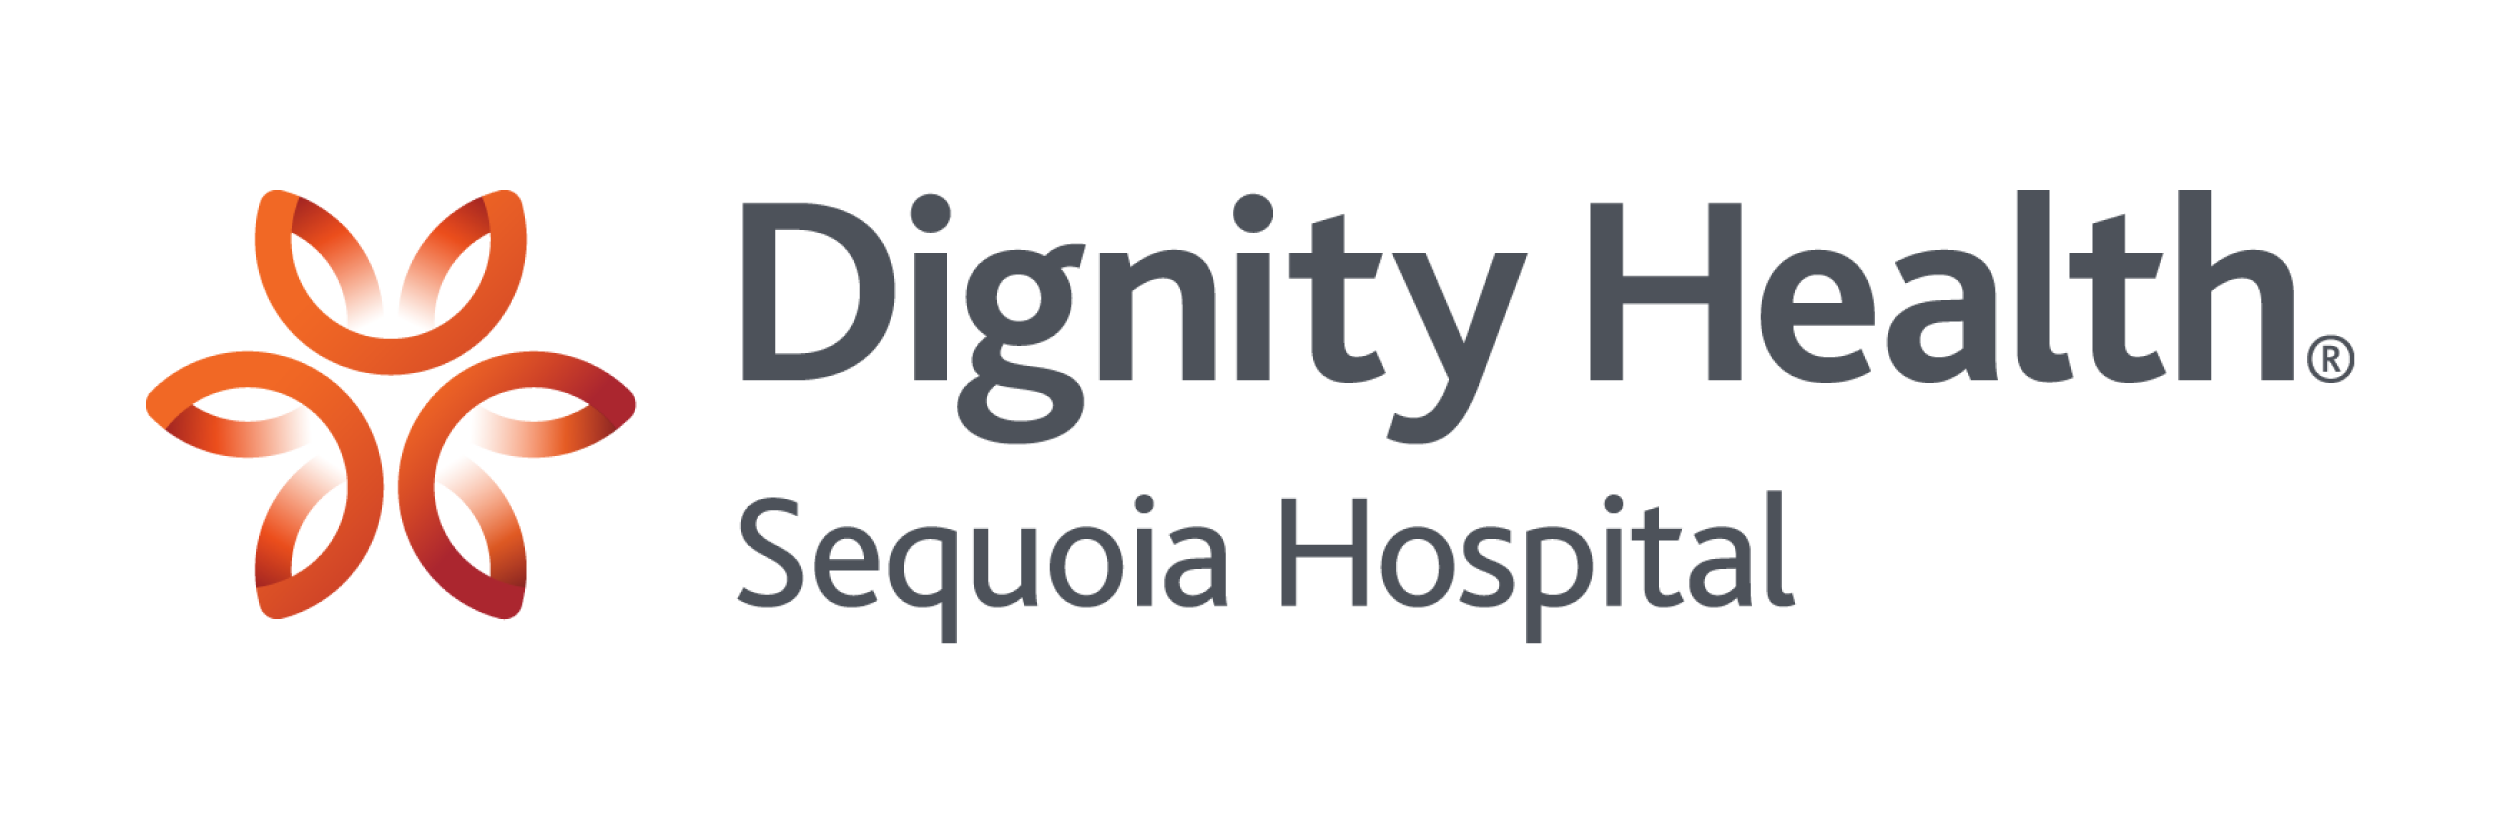 Dignity Health Sequoia Hospital Logo